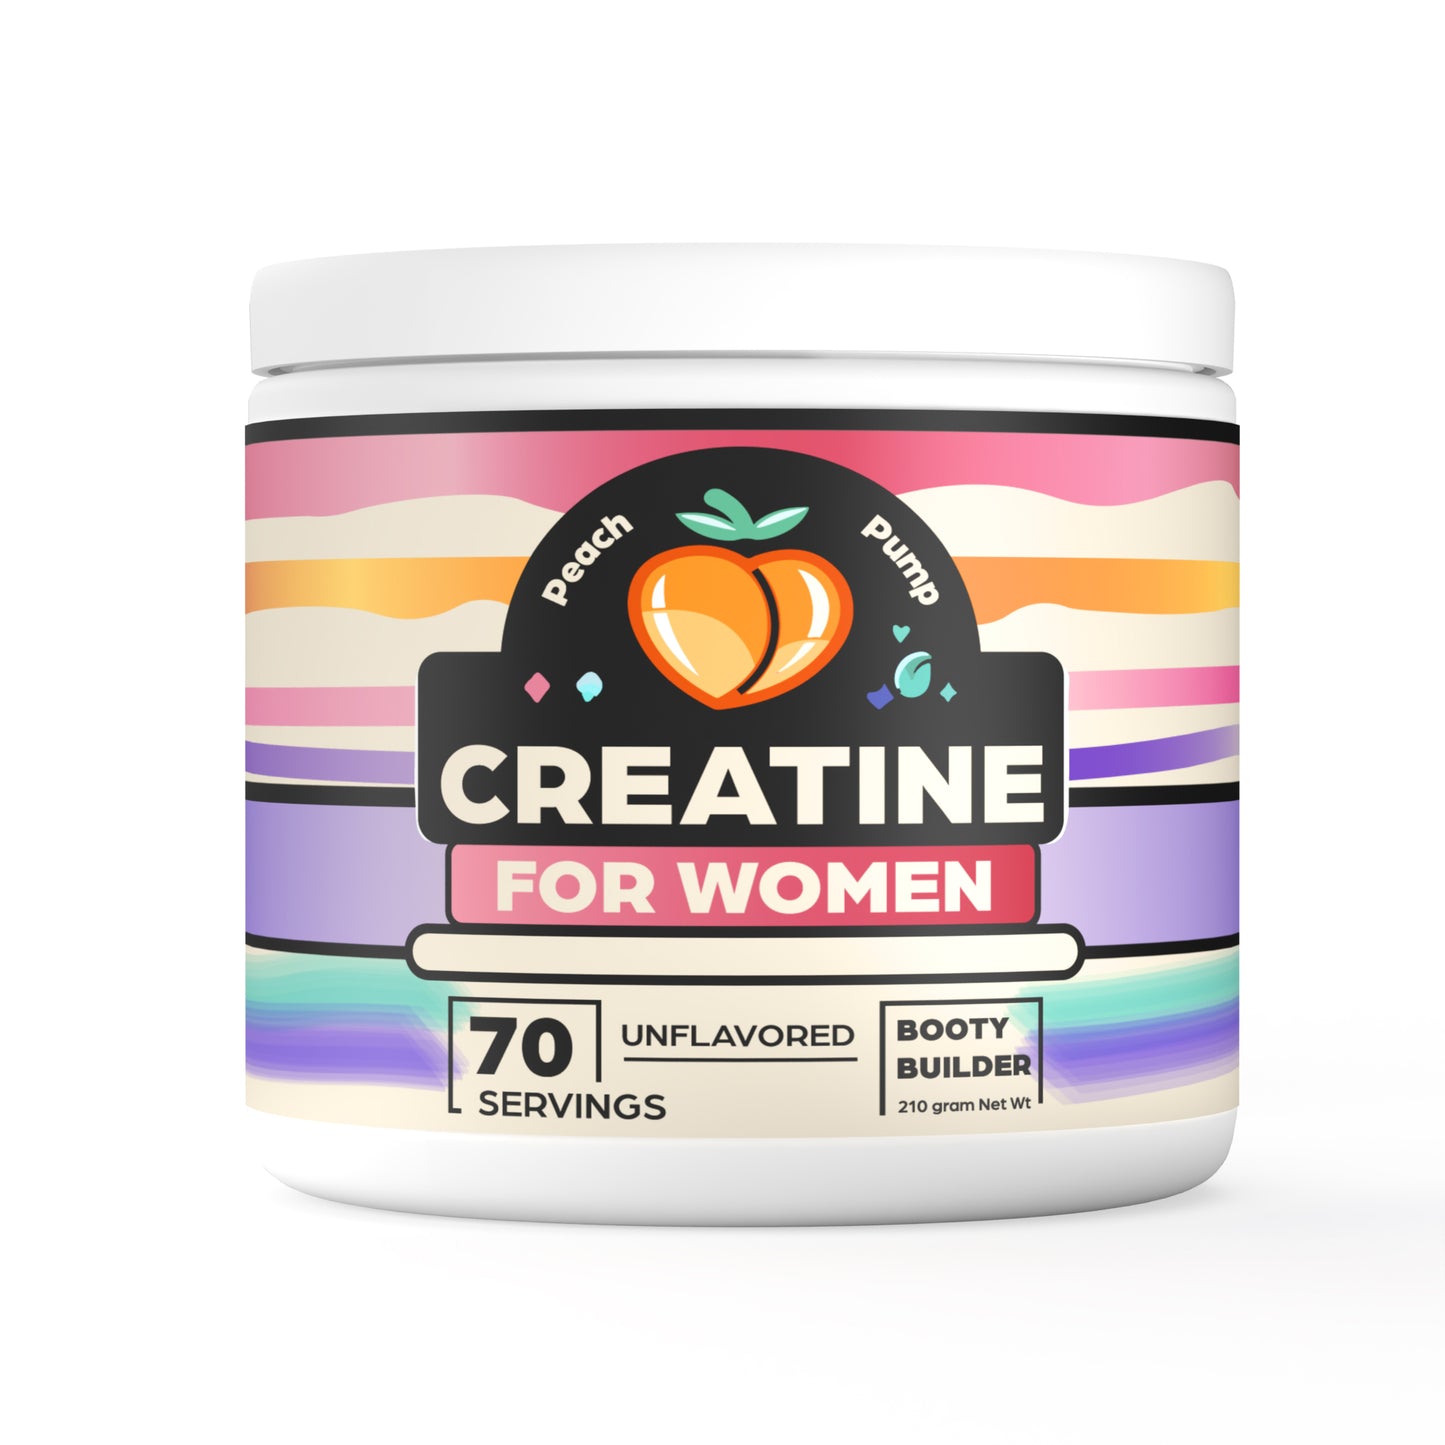 Creatine for Women - Creatina - Creatine for Women Booty Gain - Creatine Powder - Women's Creatine - Booty Builder - 70 Servings: Unflavored